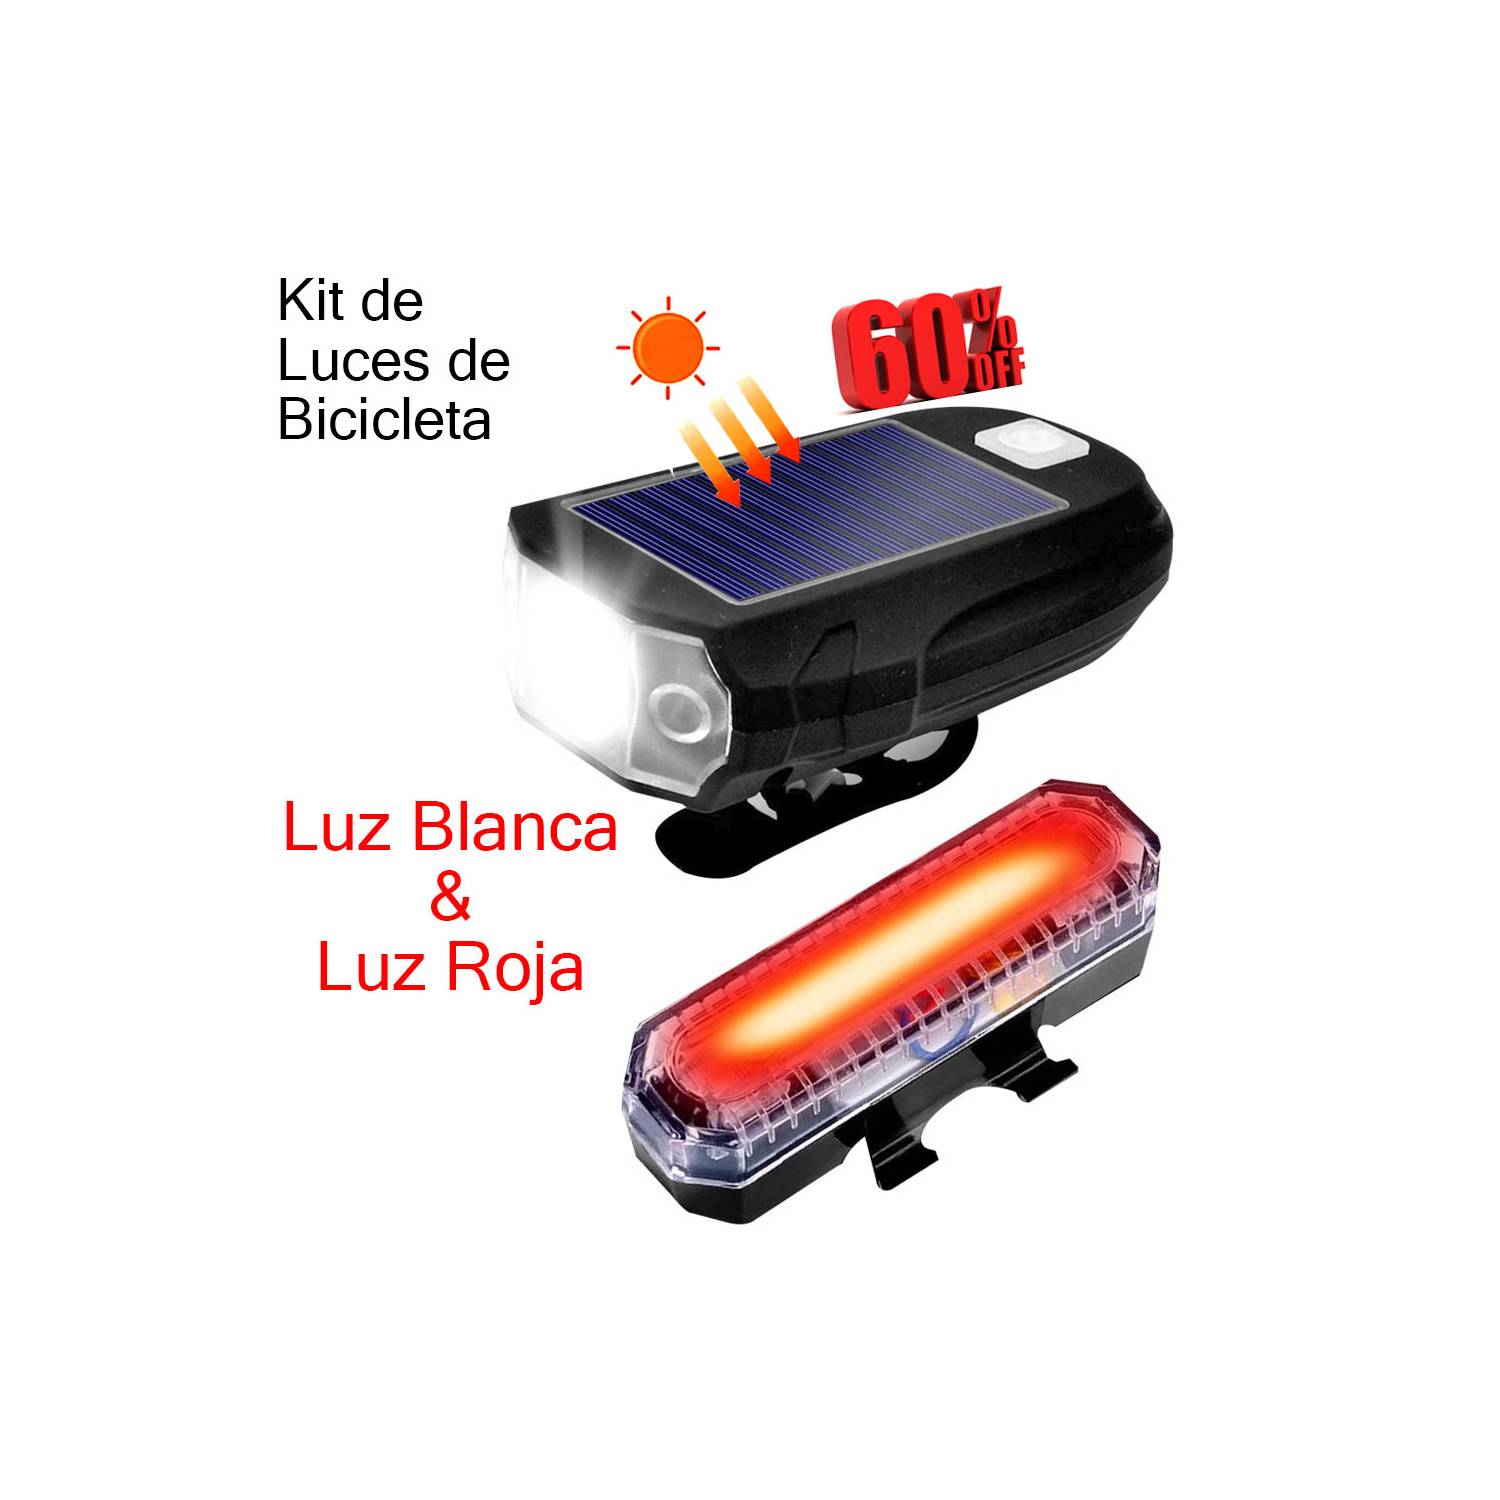 Kit de Luces Recargables USB - Bici Urbana